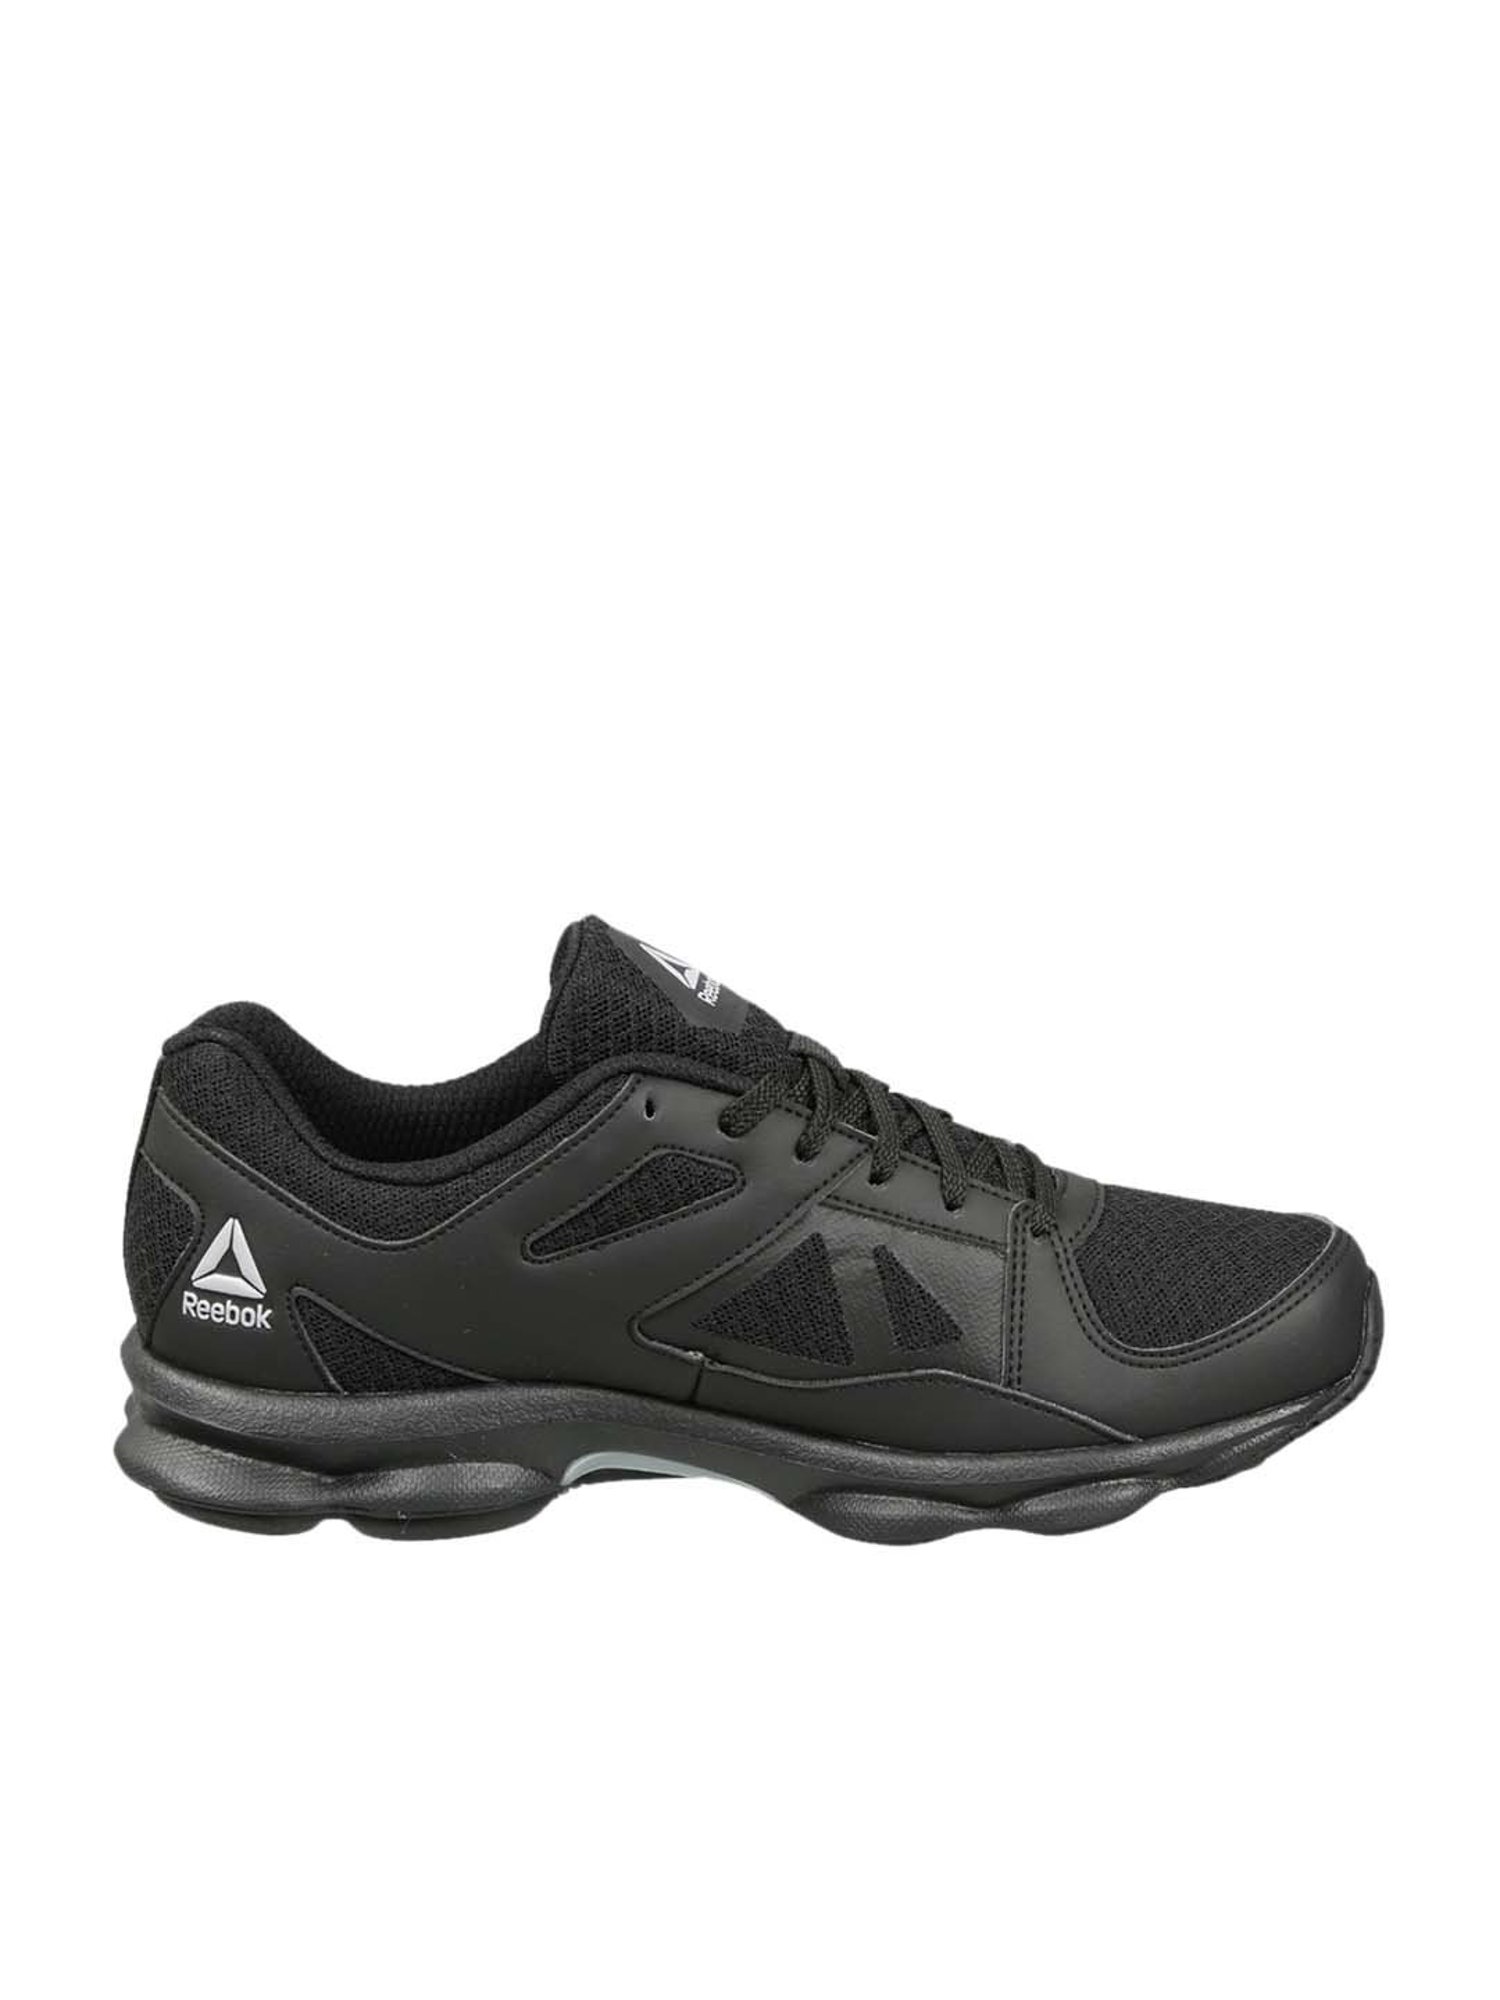 Buy Reebok Runtone Doheny 2.0 LP Black Training Shoes for at Best Price Tata CLiQ